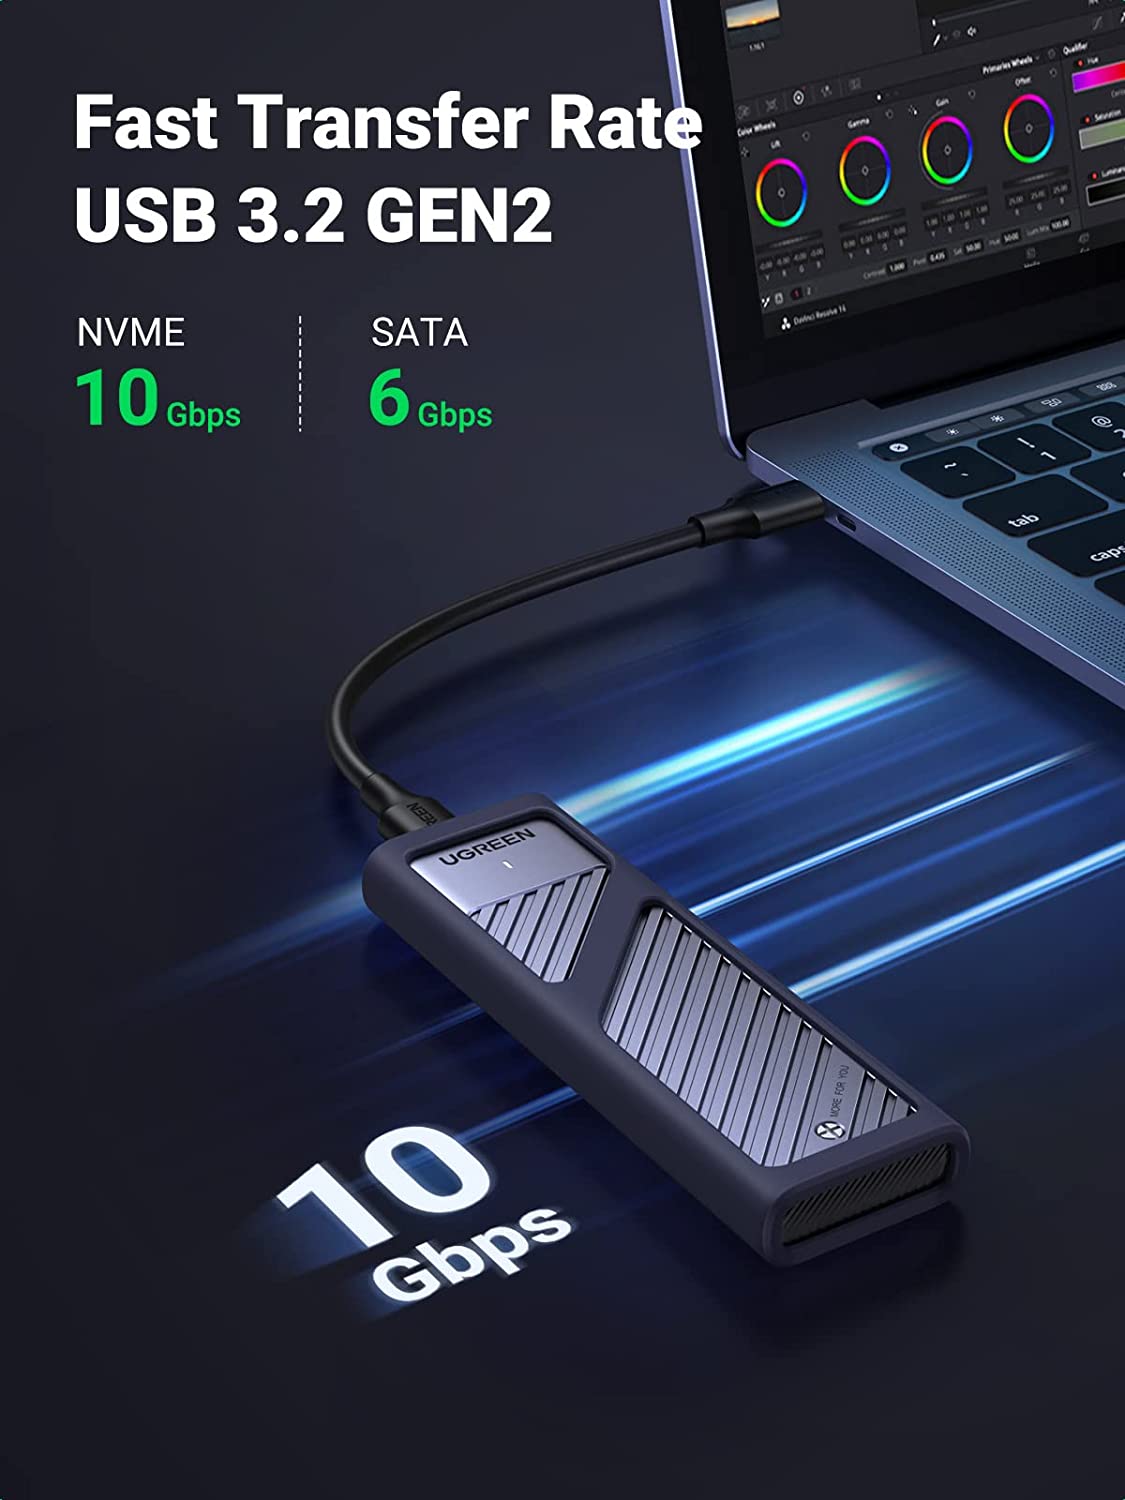 UGREEN M2 NVMe SSD ENCLOSURE (USB3.2 Gen 2 10Gbps) 